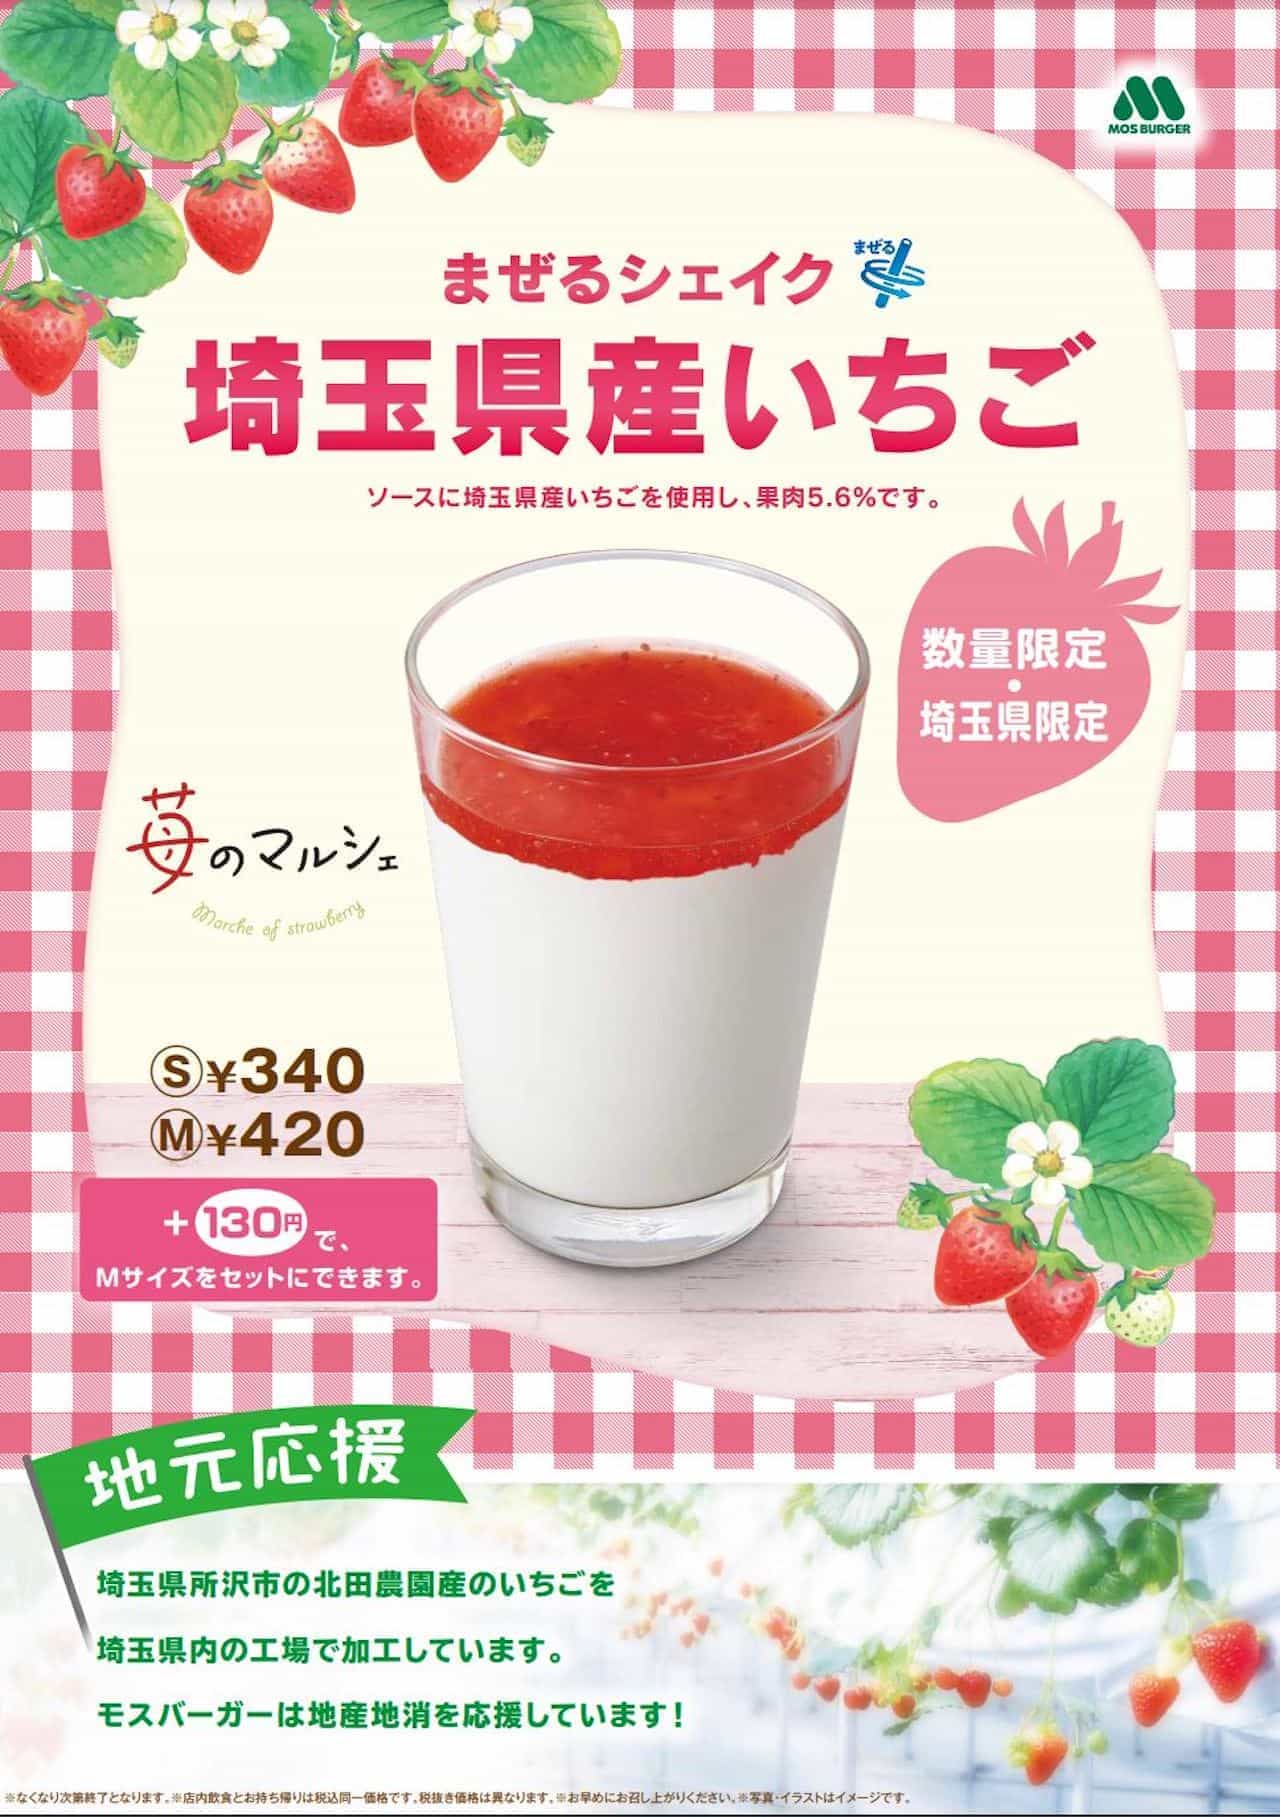 Mos Burger Mix Shake Saitama Strawberry